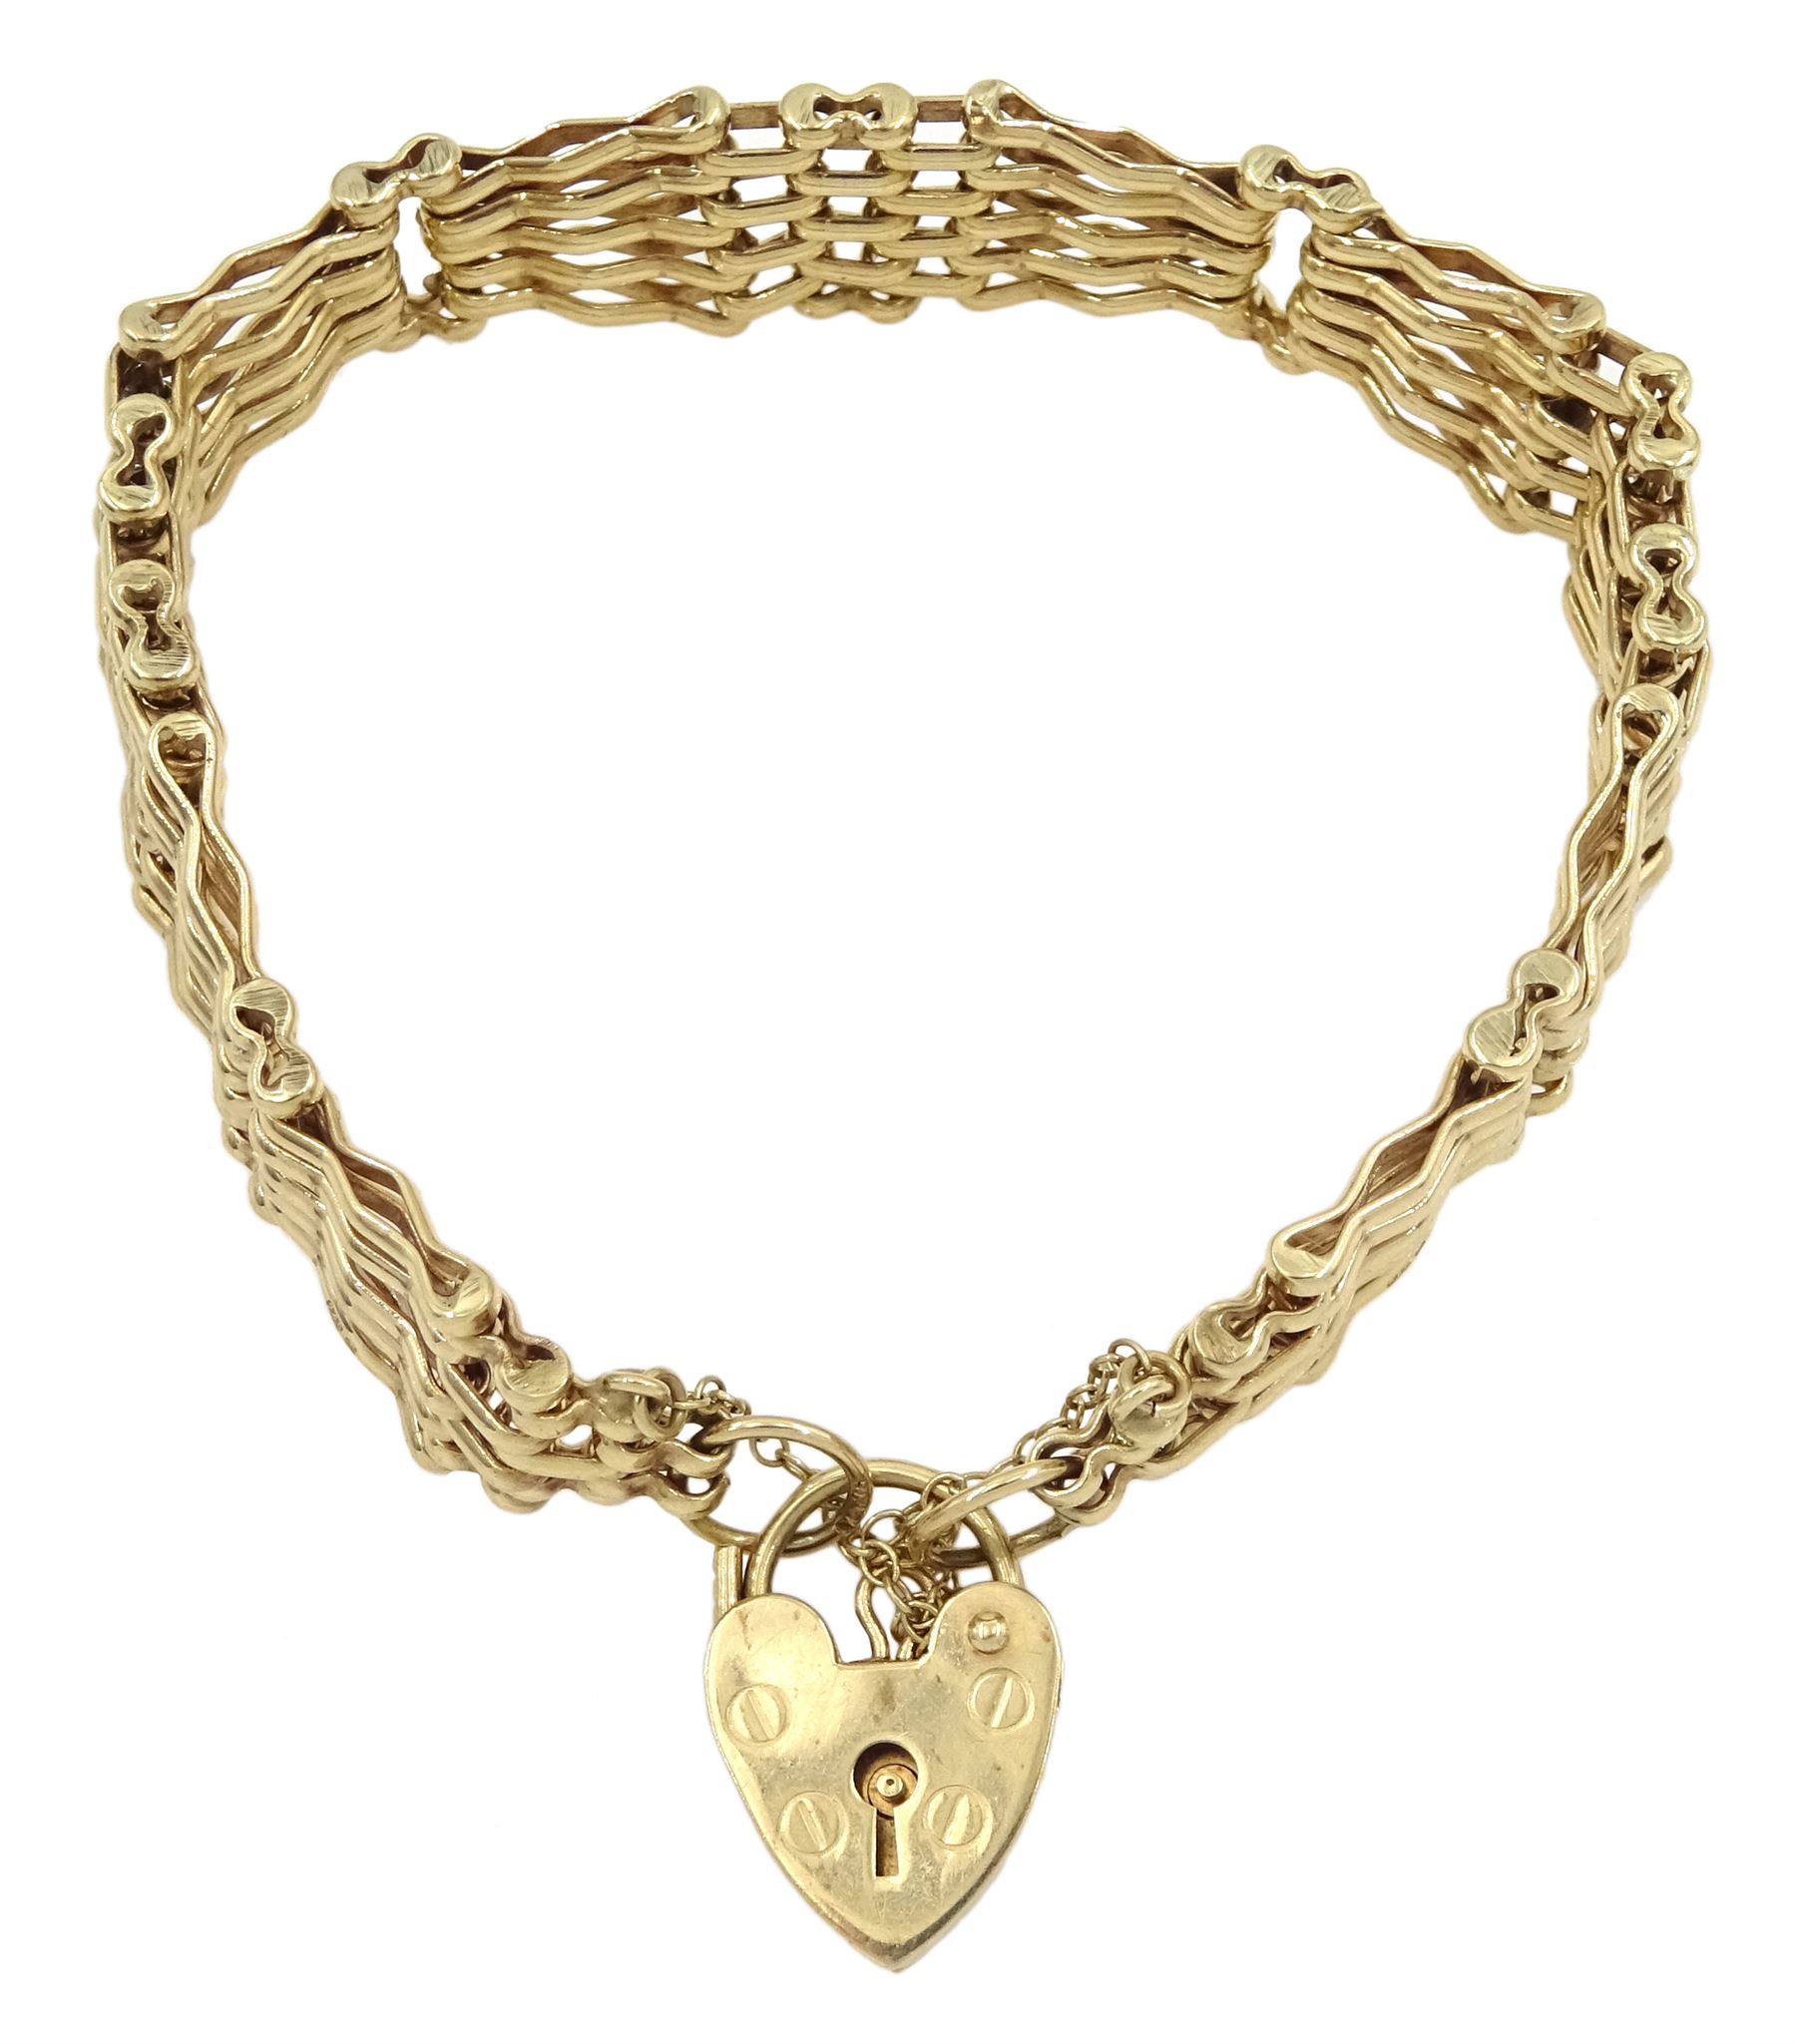 9ct gold fancy five bar link bracelet